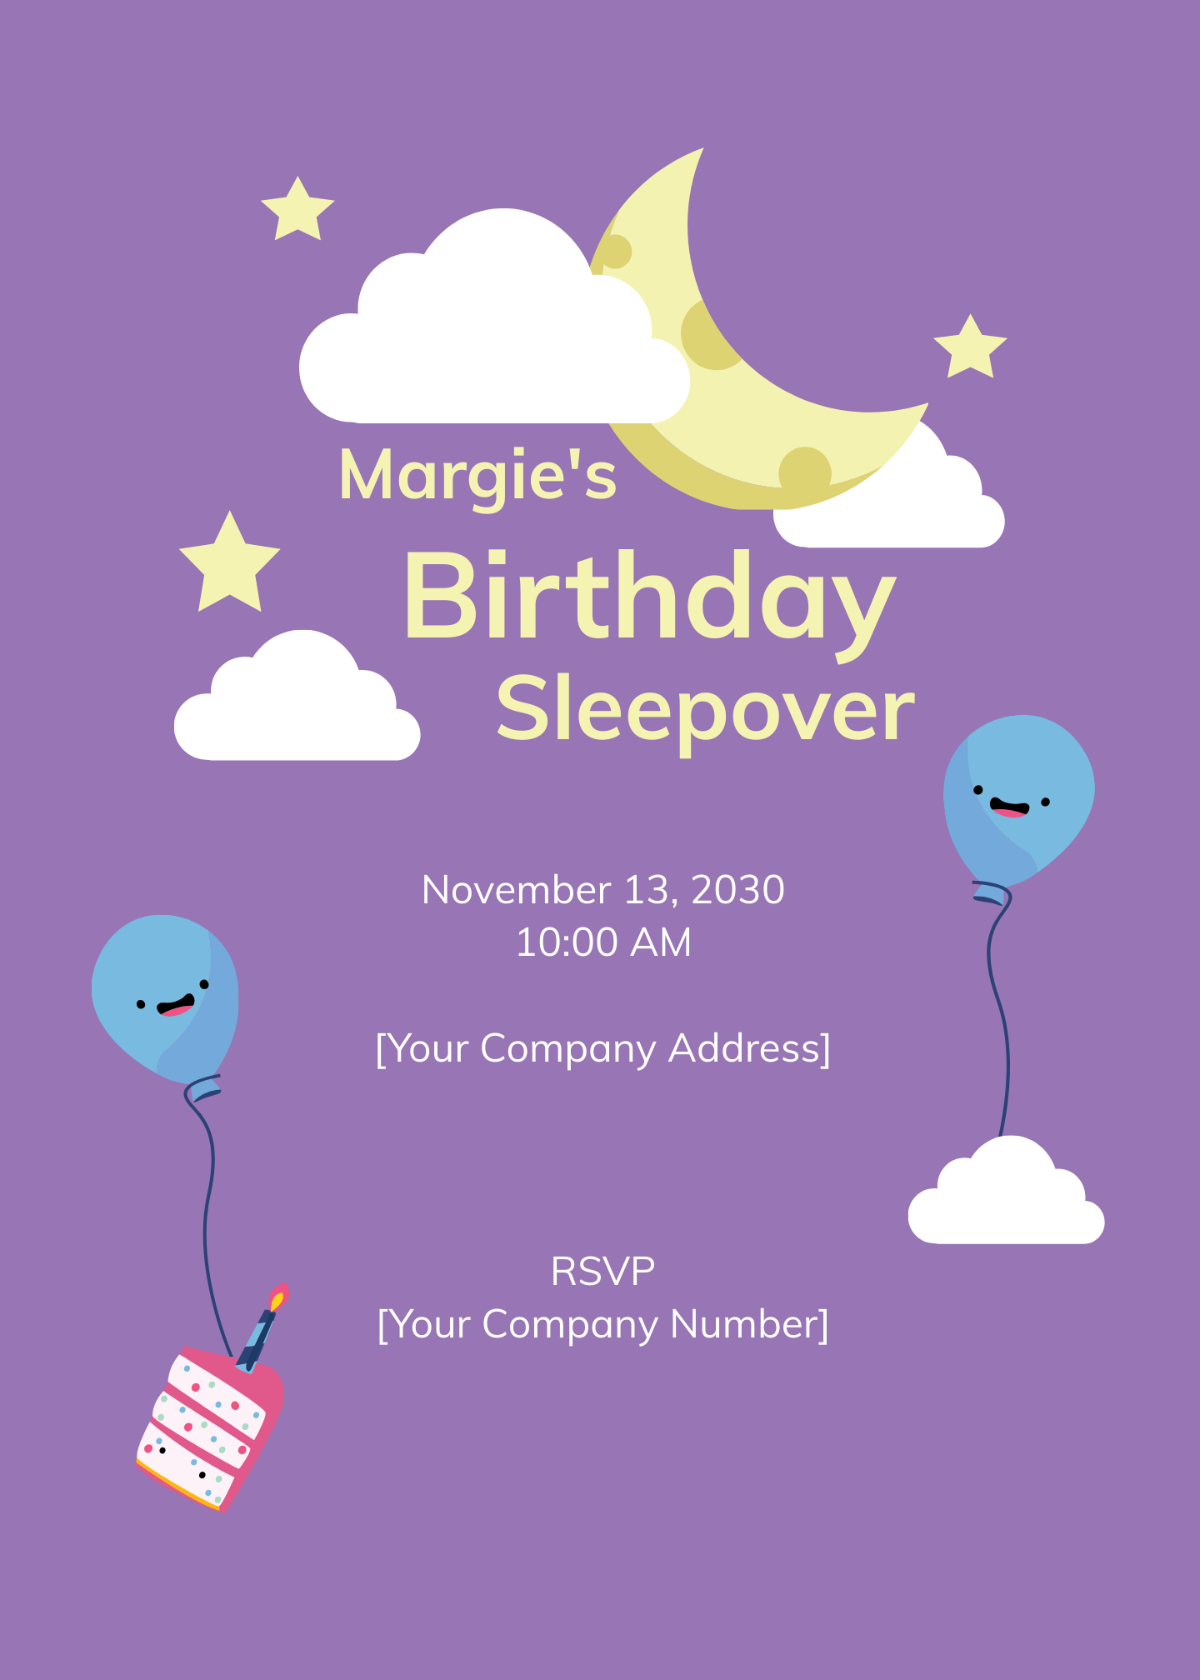 Free Birthday Sleepover Invitation Template